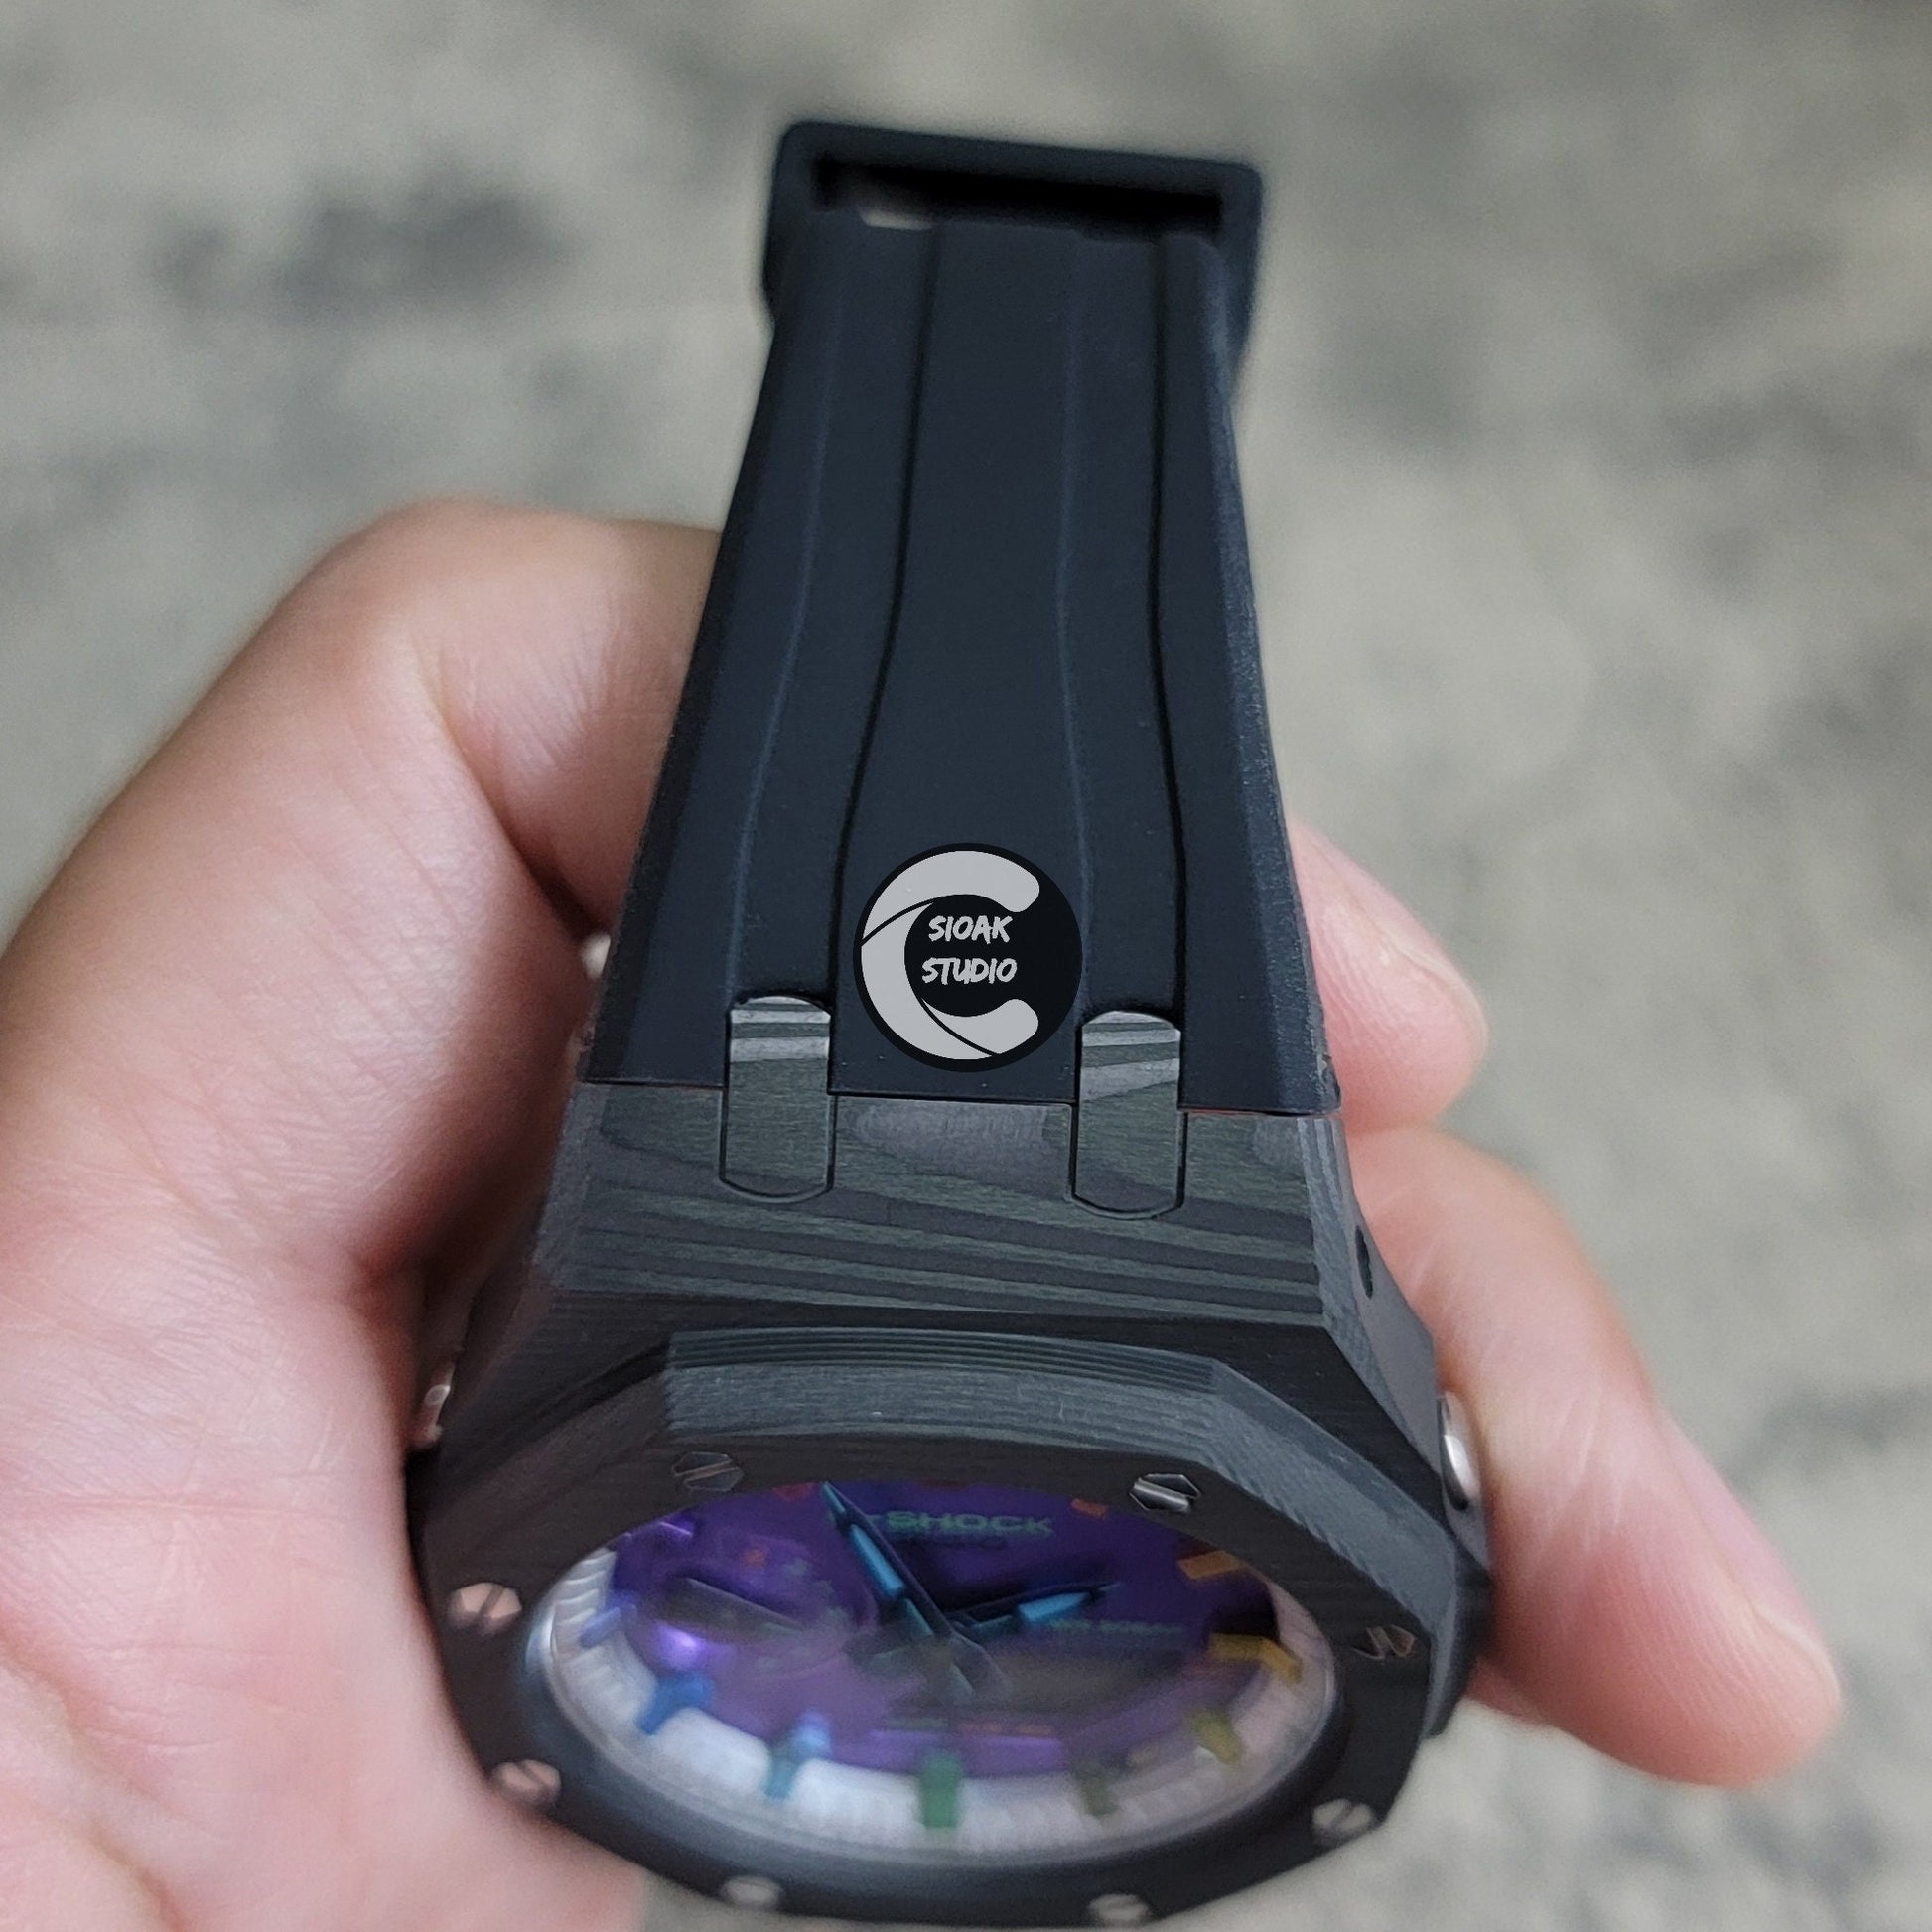 Casioak Mod Watch Carbon Fiber Black Case Black Strap Silver Rainbow Time Mark Purple Dial 44mm - Casioak Studio